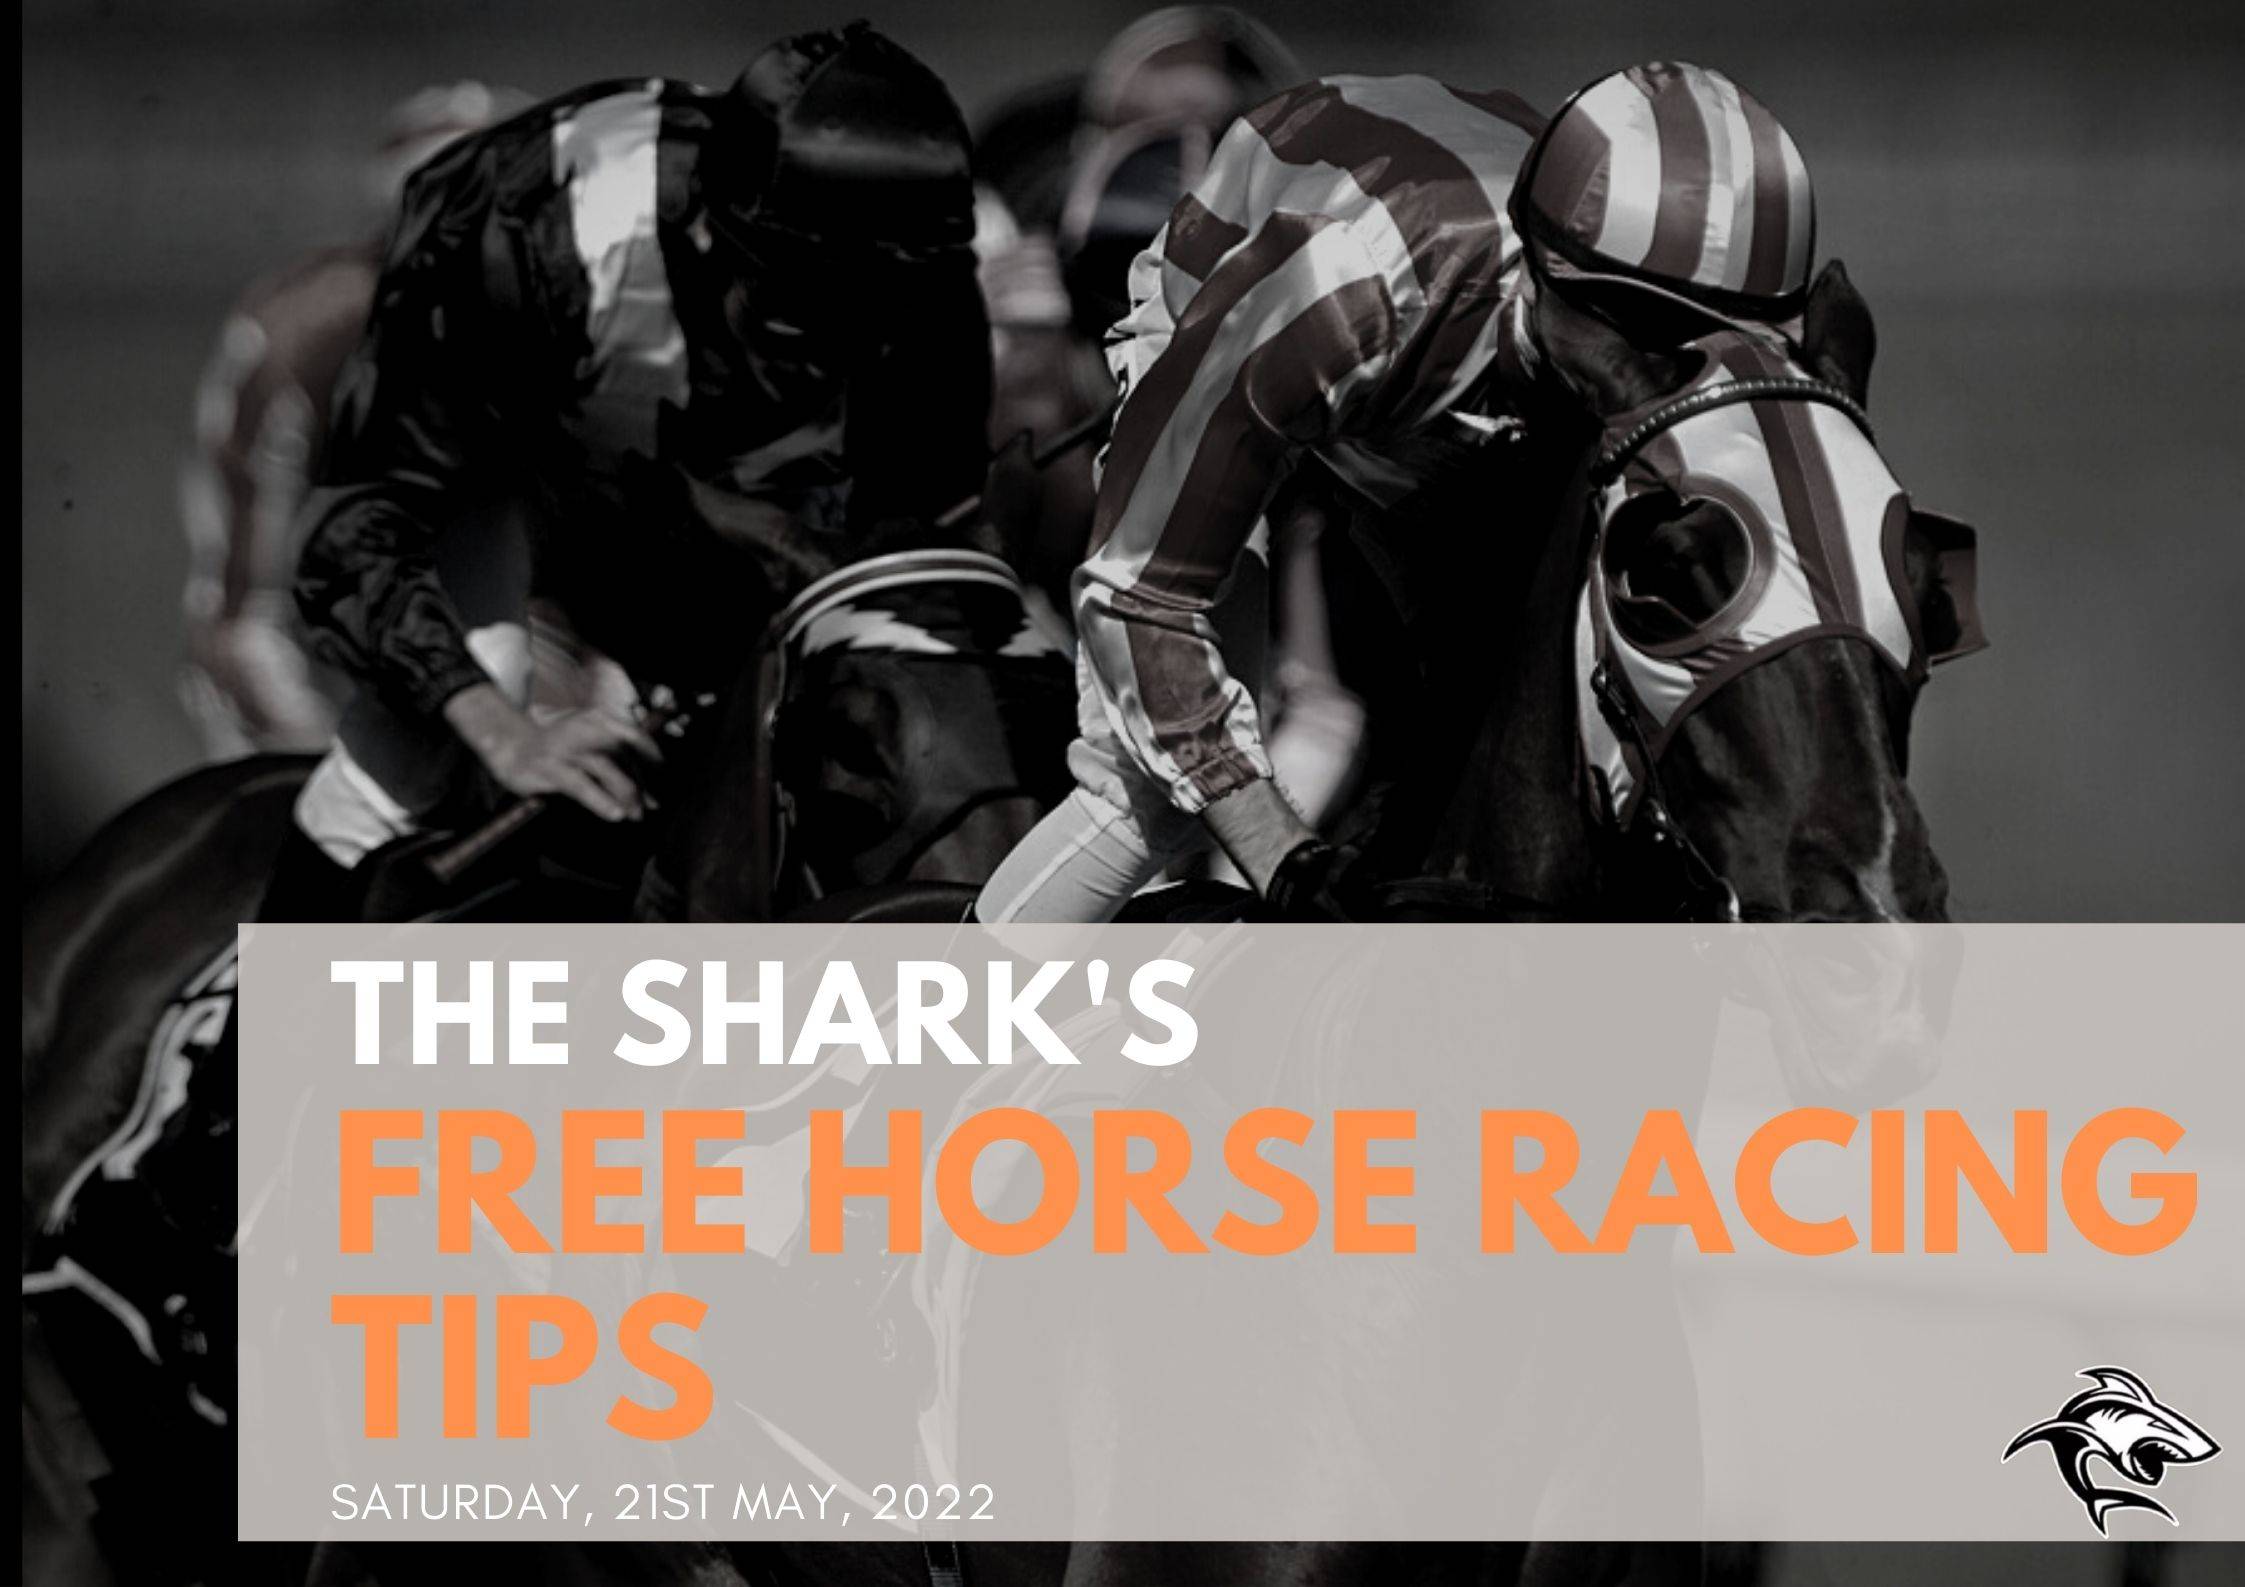 Free Horse Racing Tips - 21st May